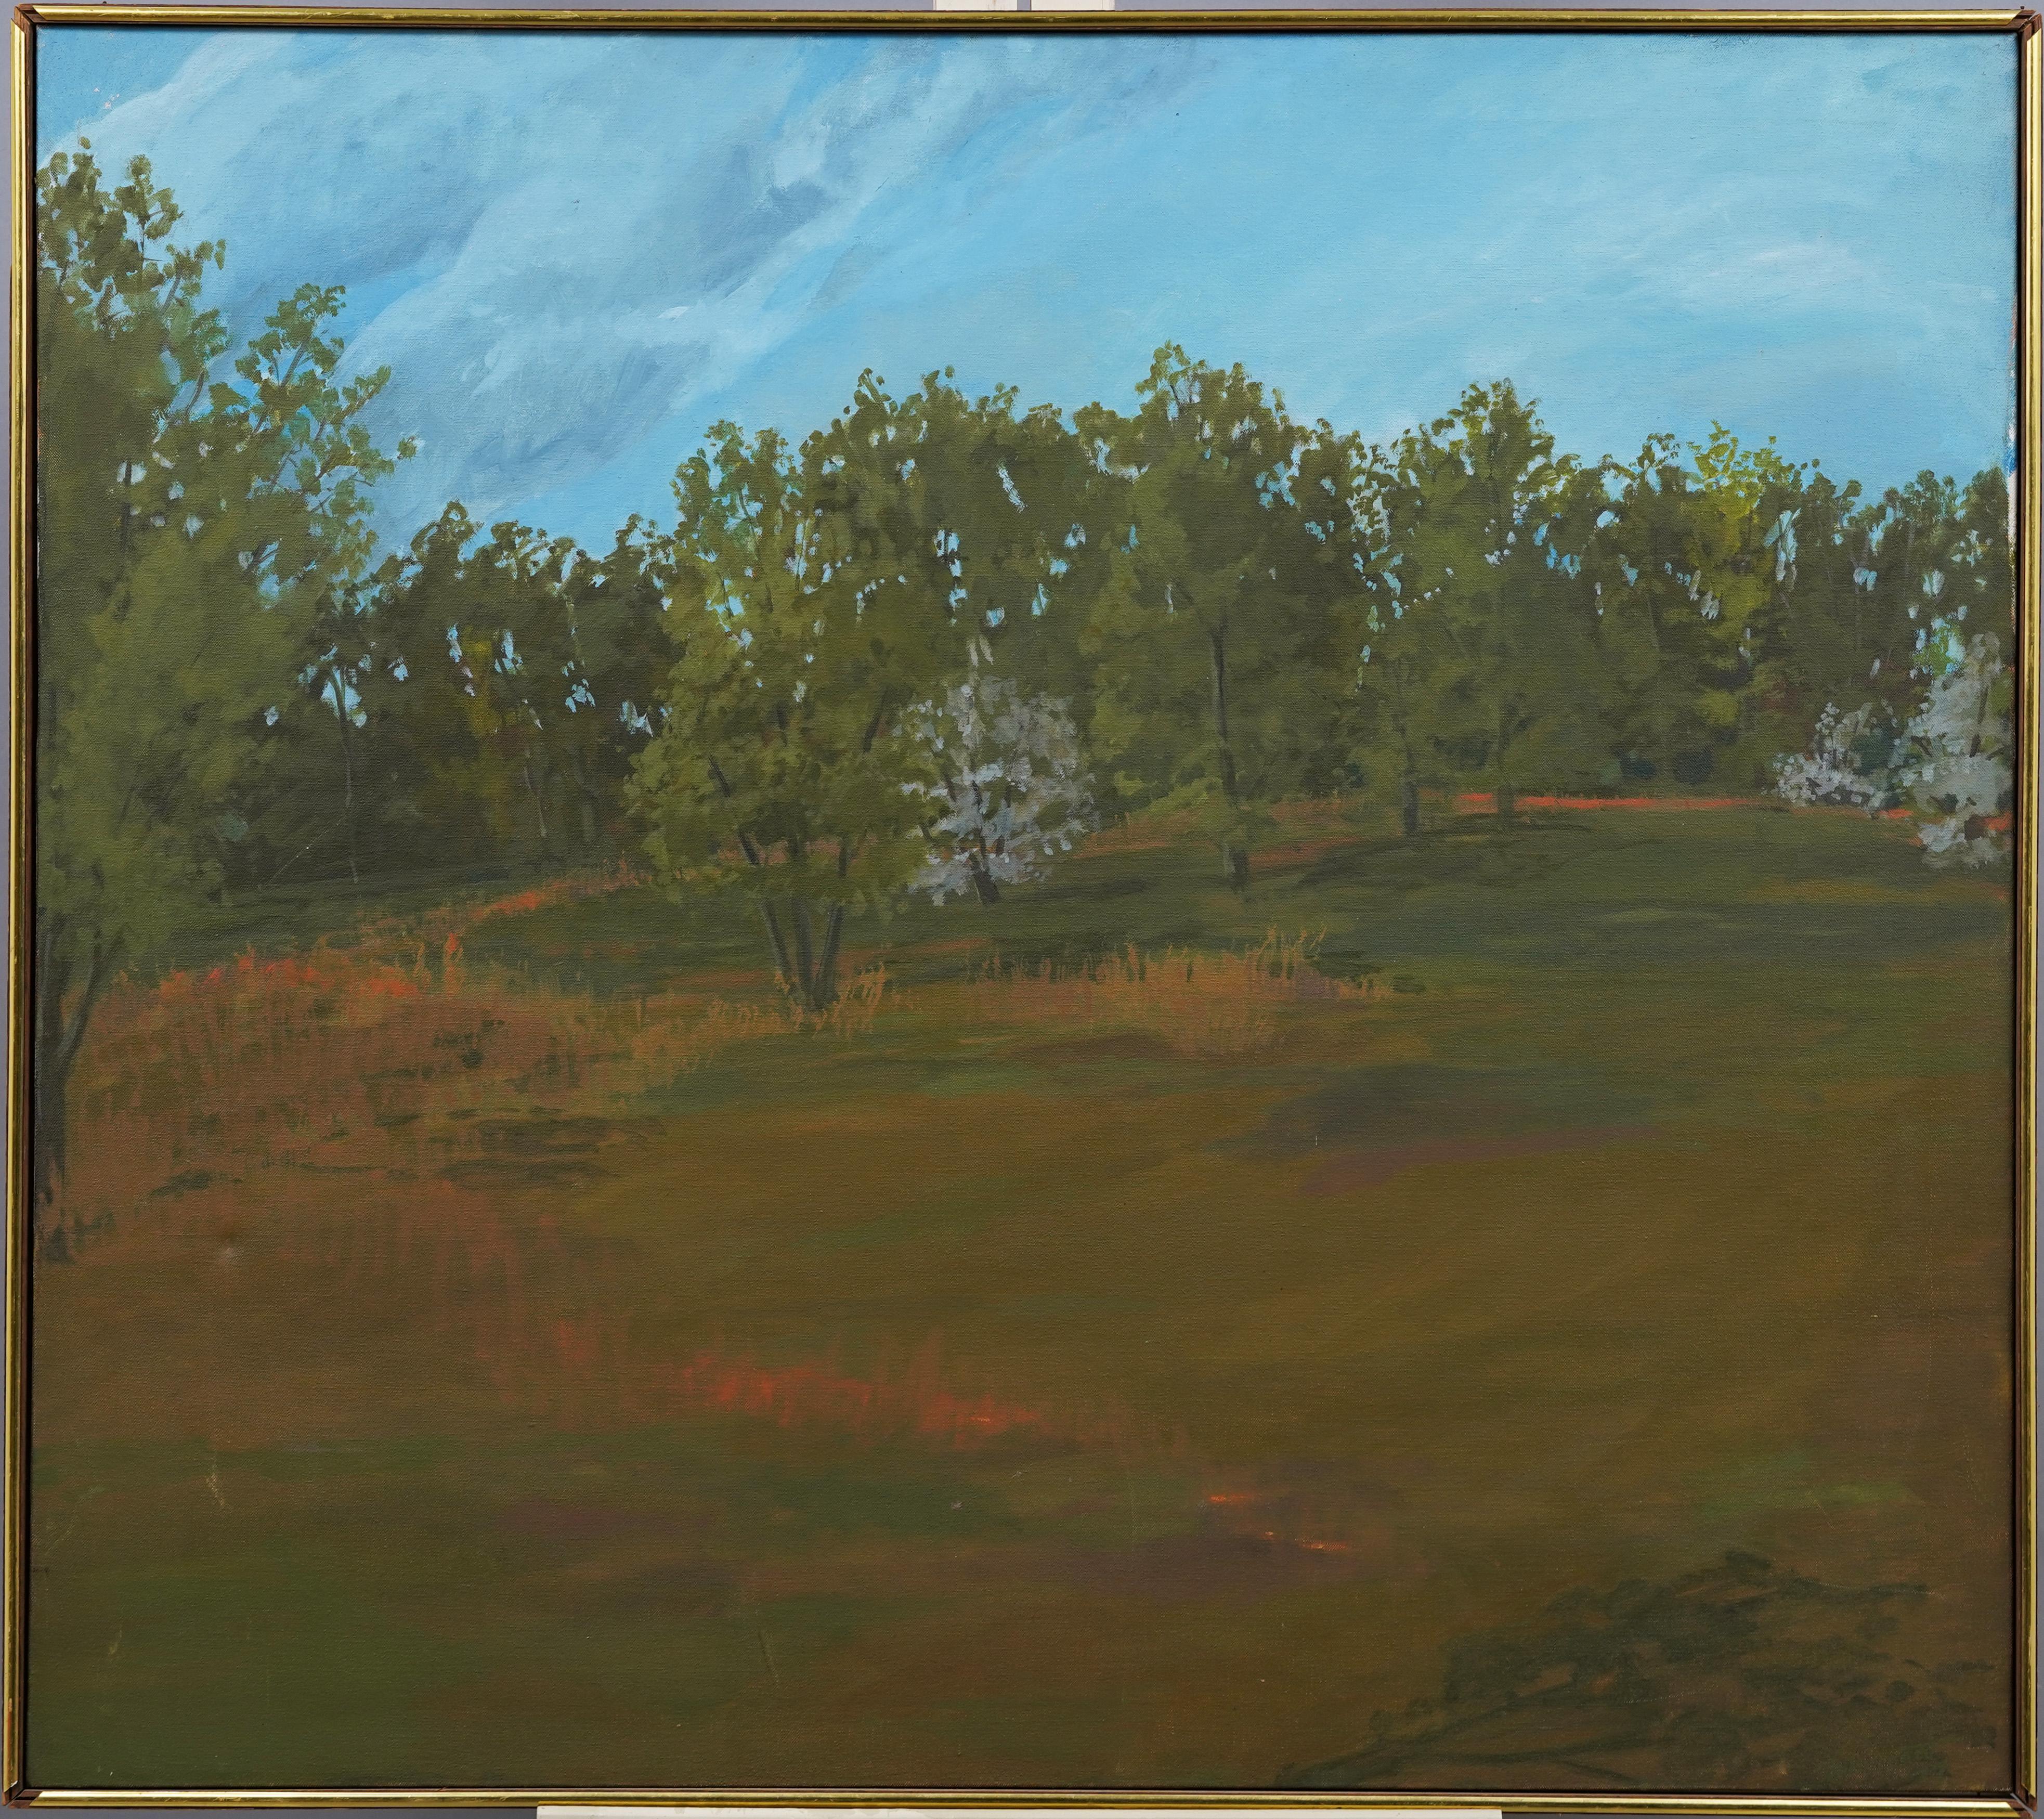 Antique American modernist landscape oil painting.  Oil on canvas.  Framed.  